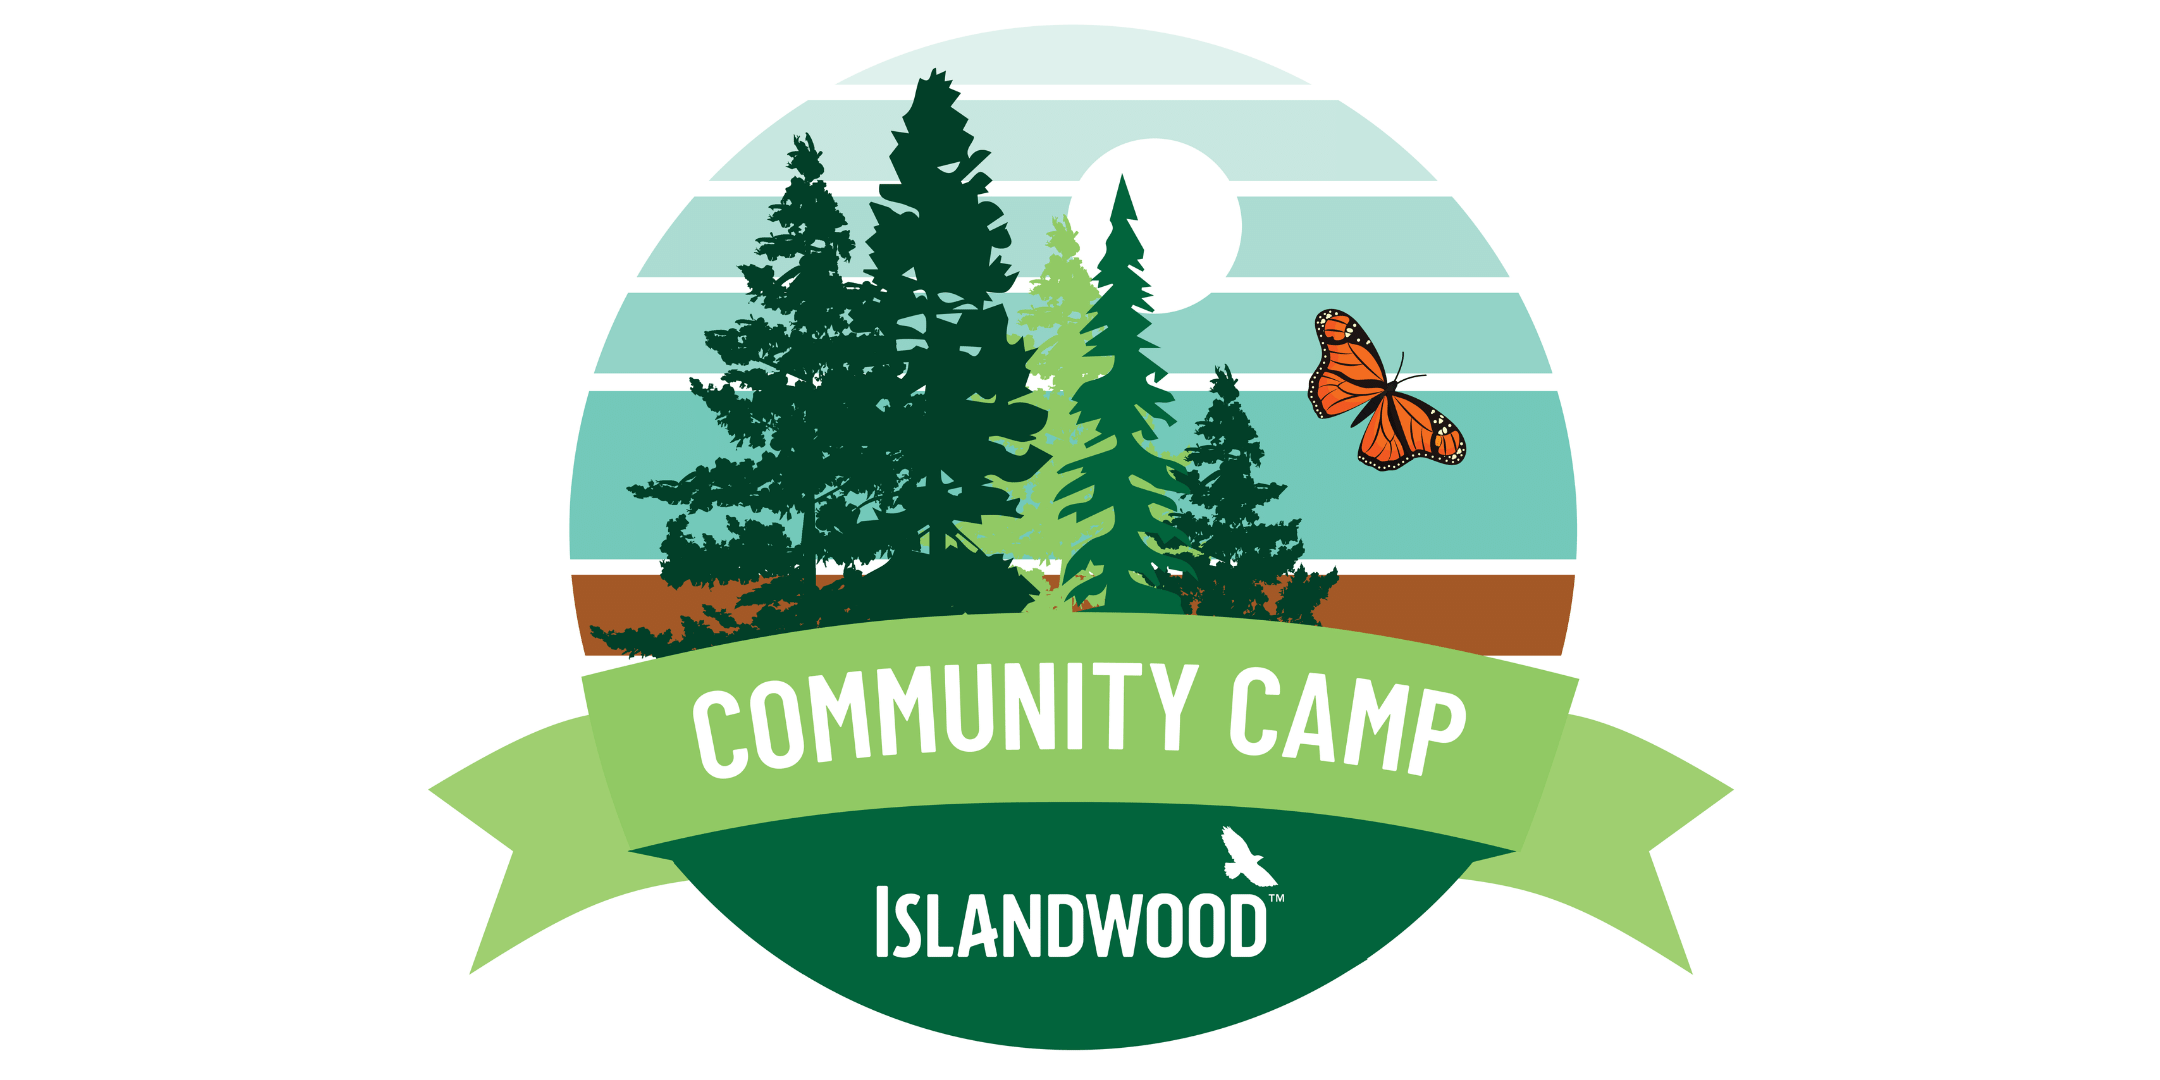 IslandWood Community Camp - Campaign